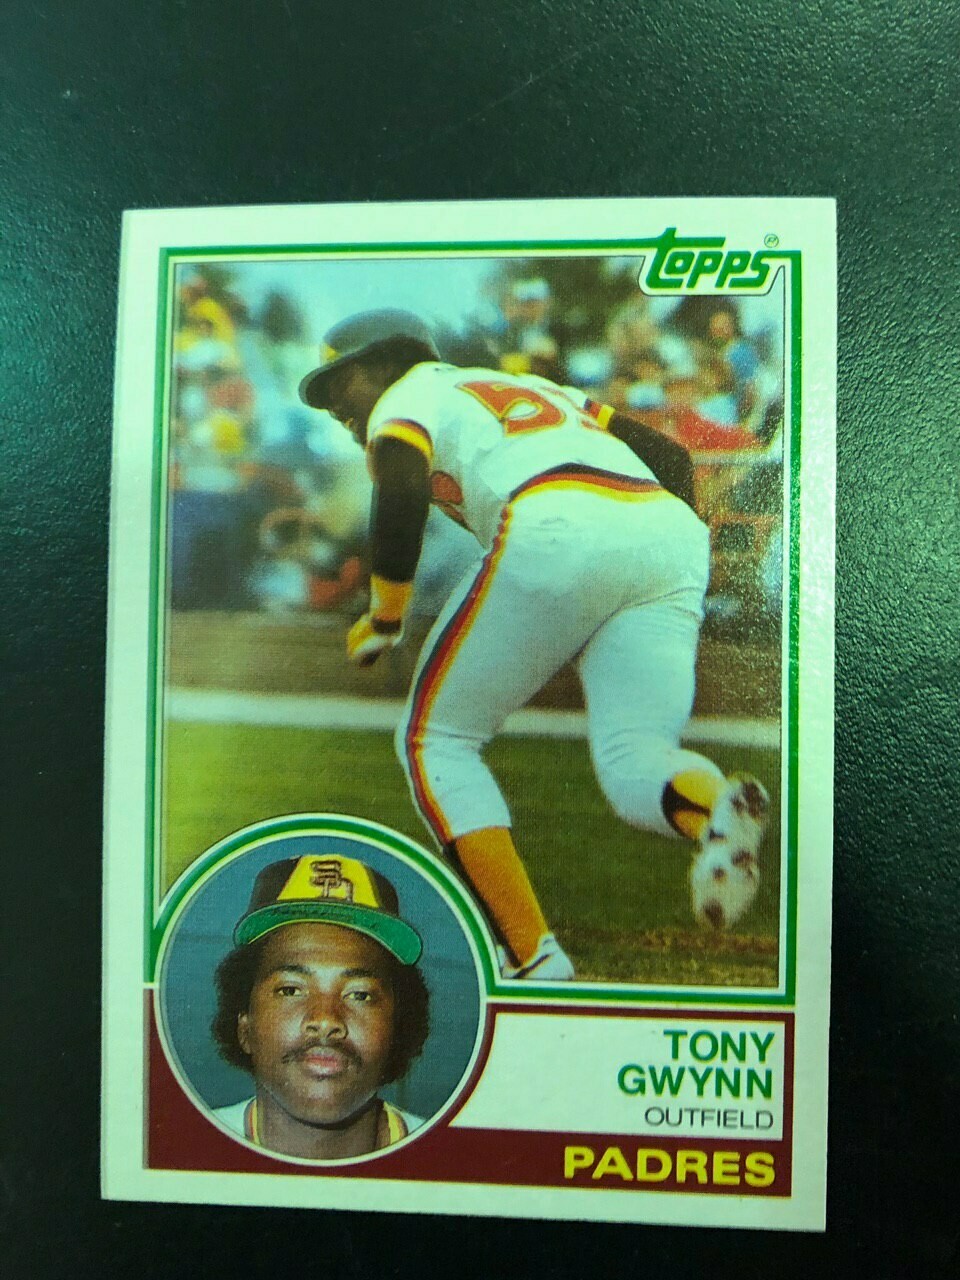 1983 Topps Tony Gwynn rookie